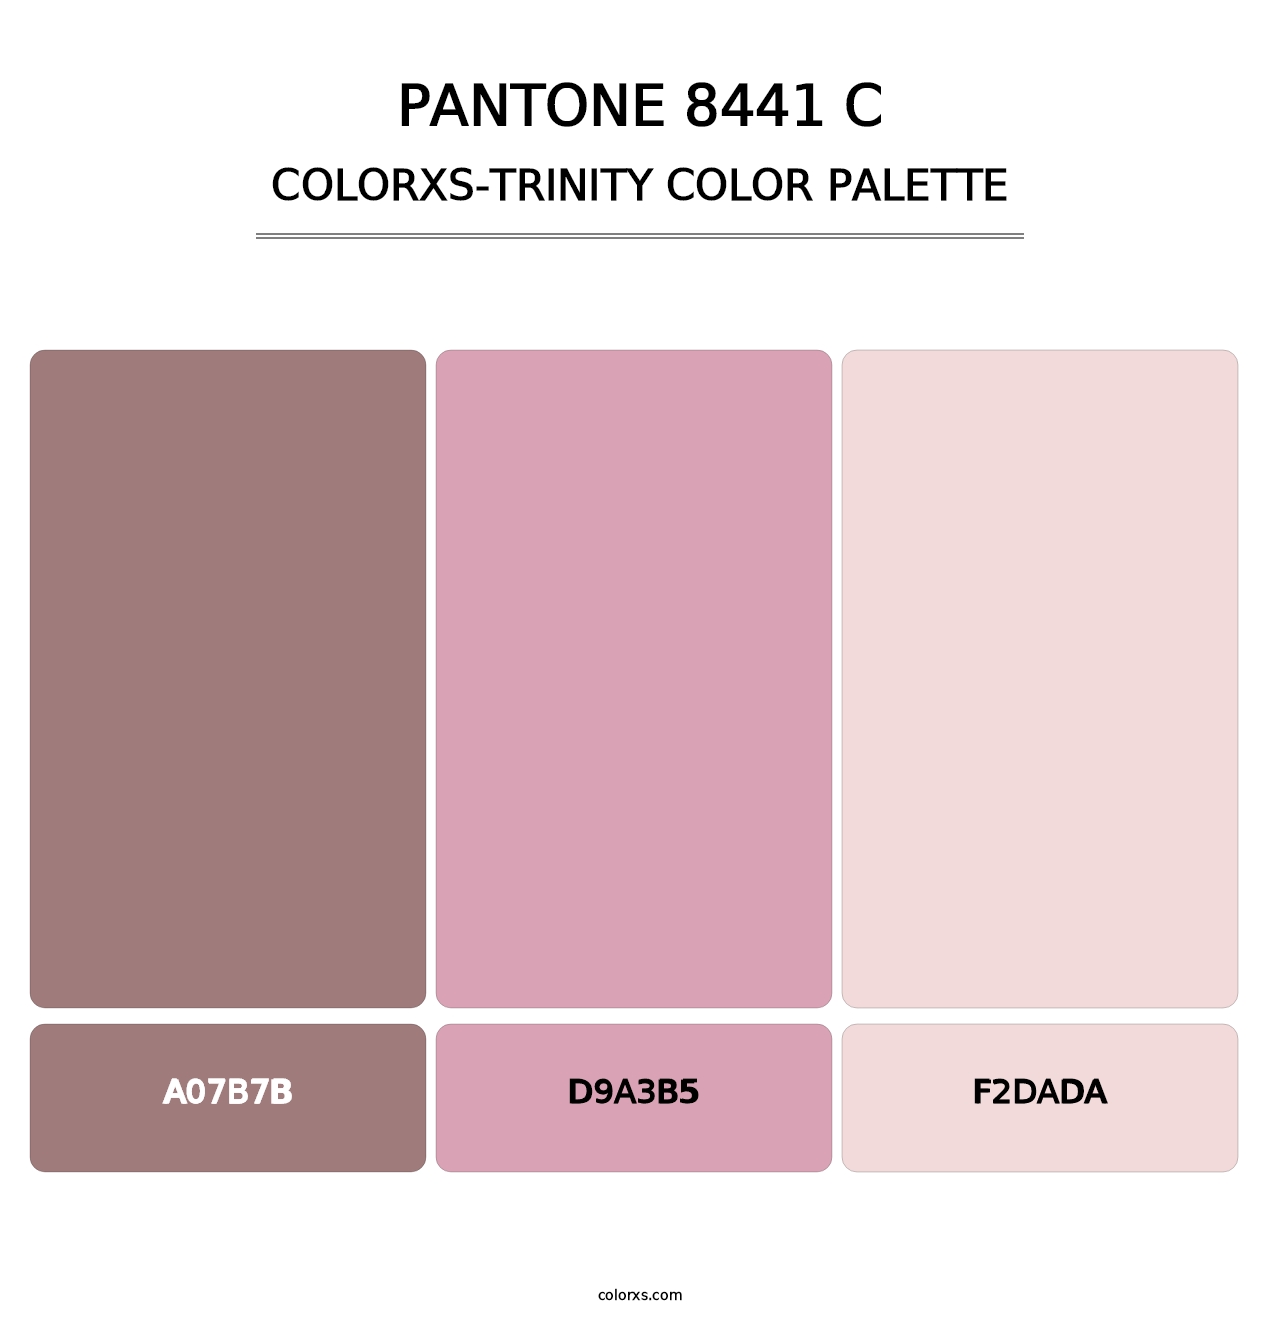 PANTONE 8441 C - Colorxs Trinity Palette